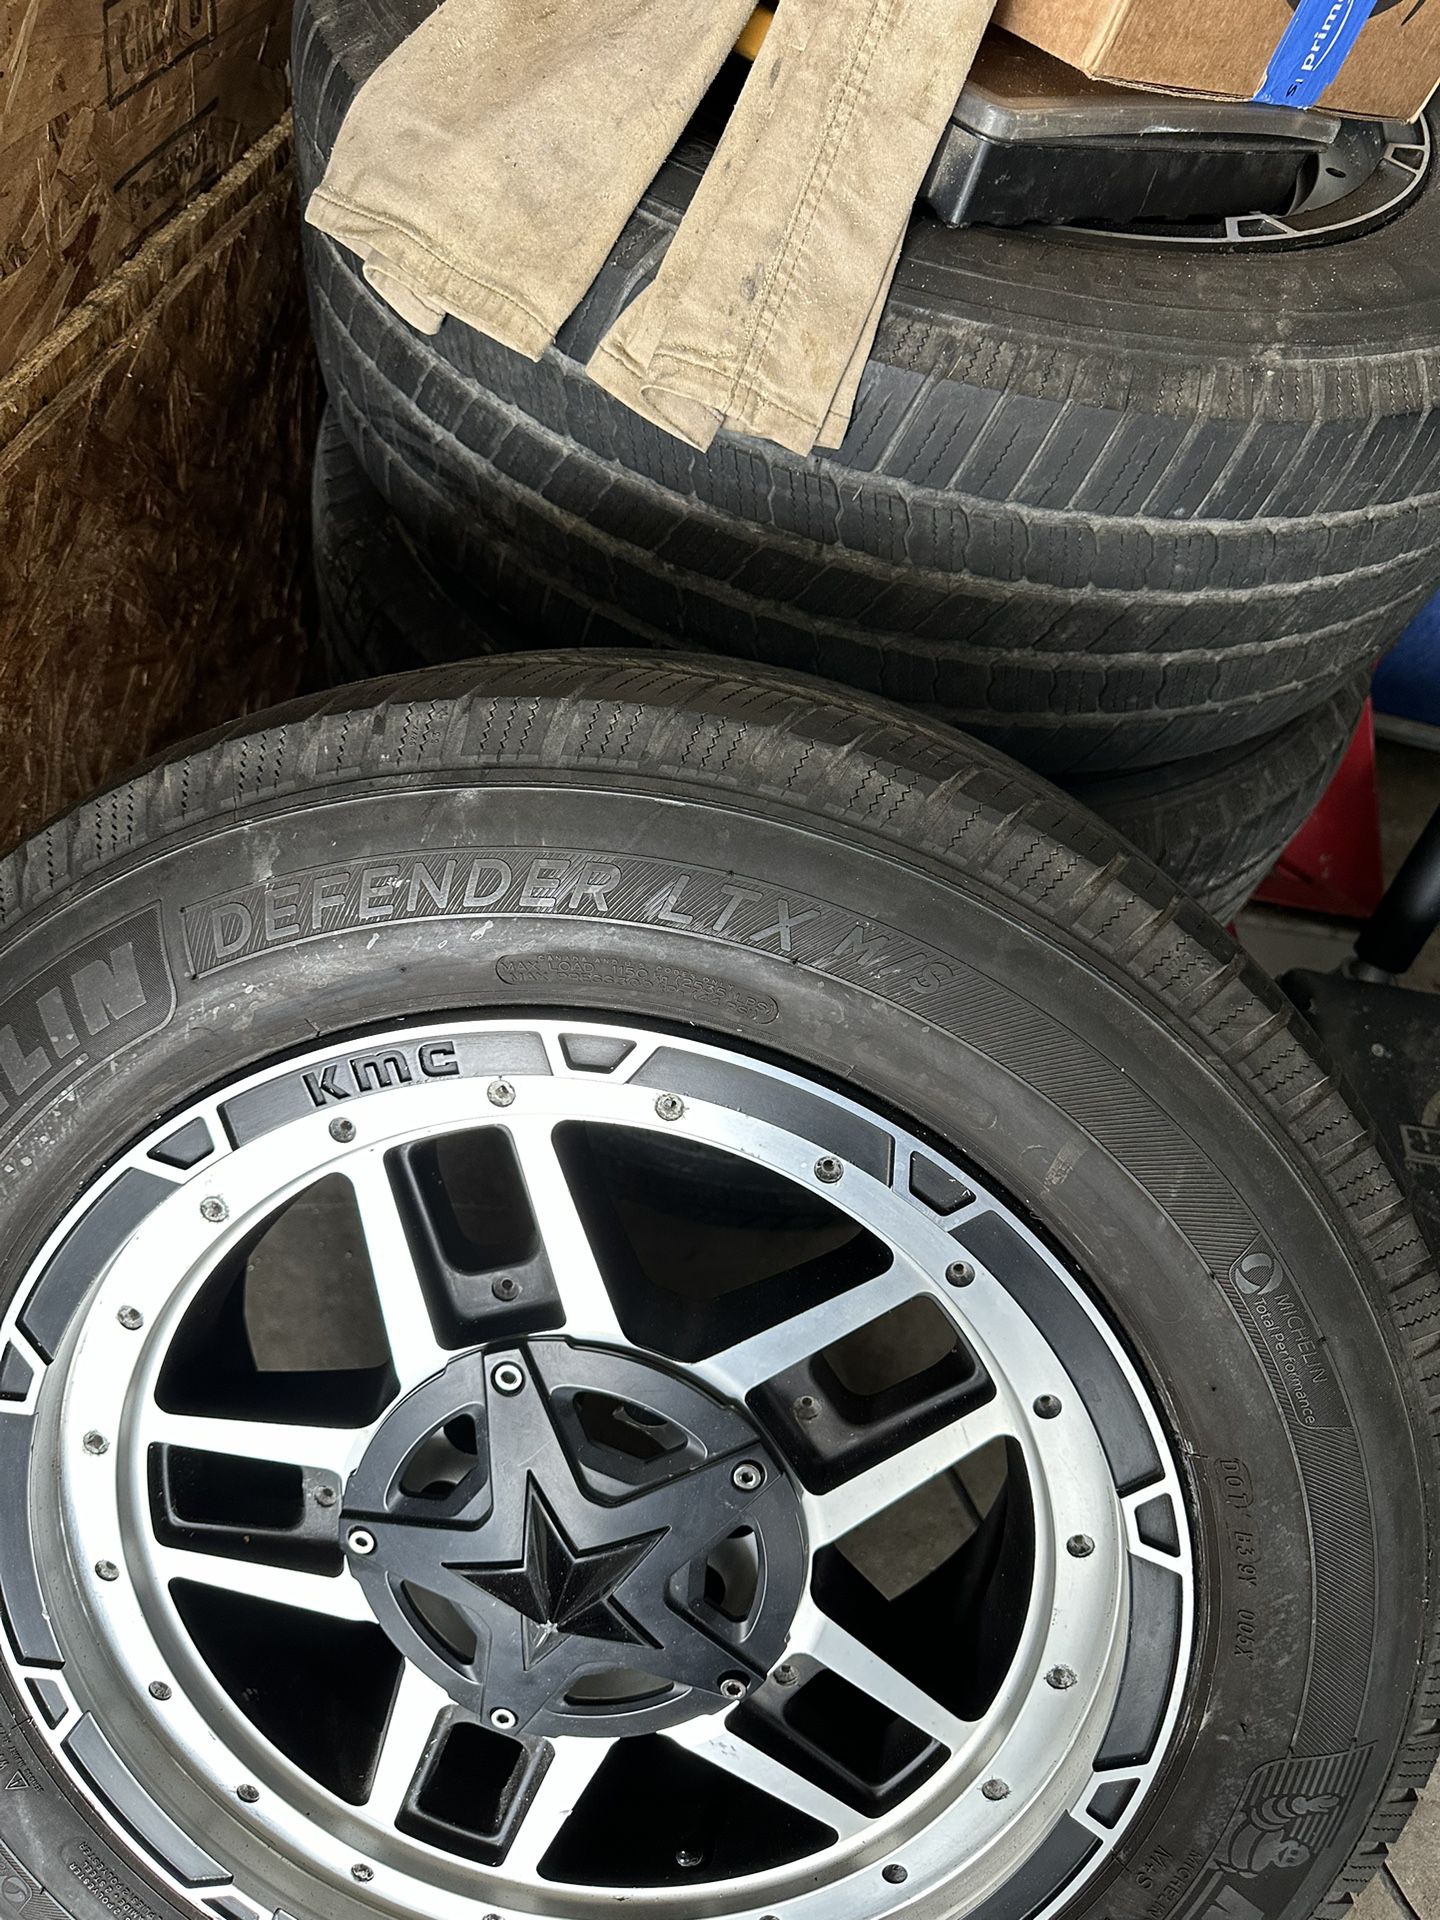 4 Kmc Rockstar 20”x10” Rims And Michelin Defender Ltx m/s Tires For F150